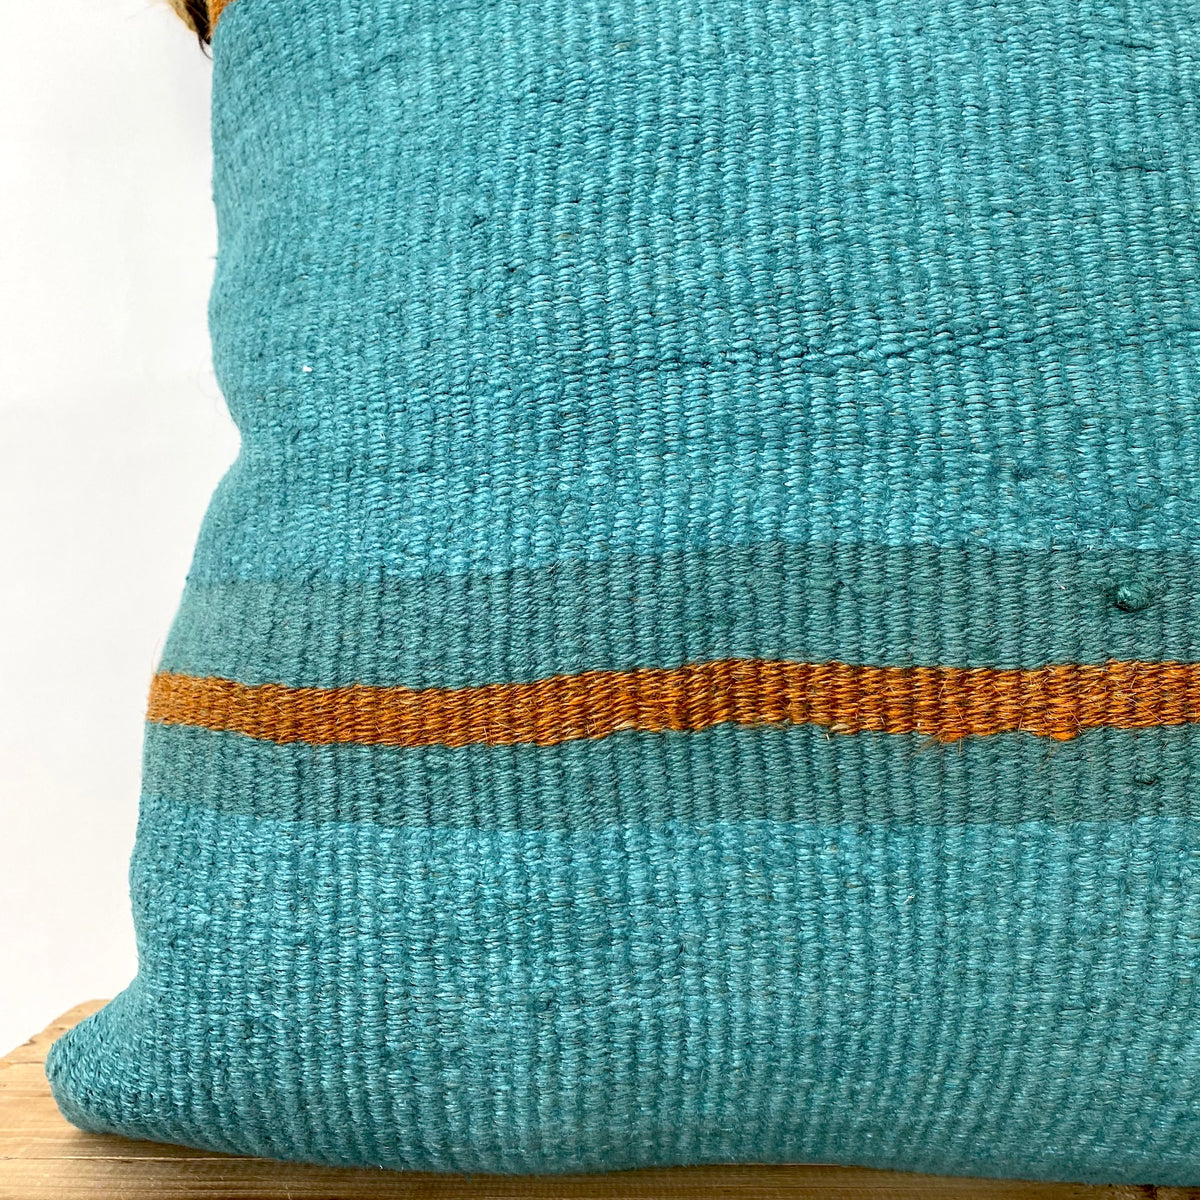 Chloris - Turquoise Hemp Pillow Cover - kudenrugs